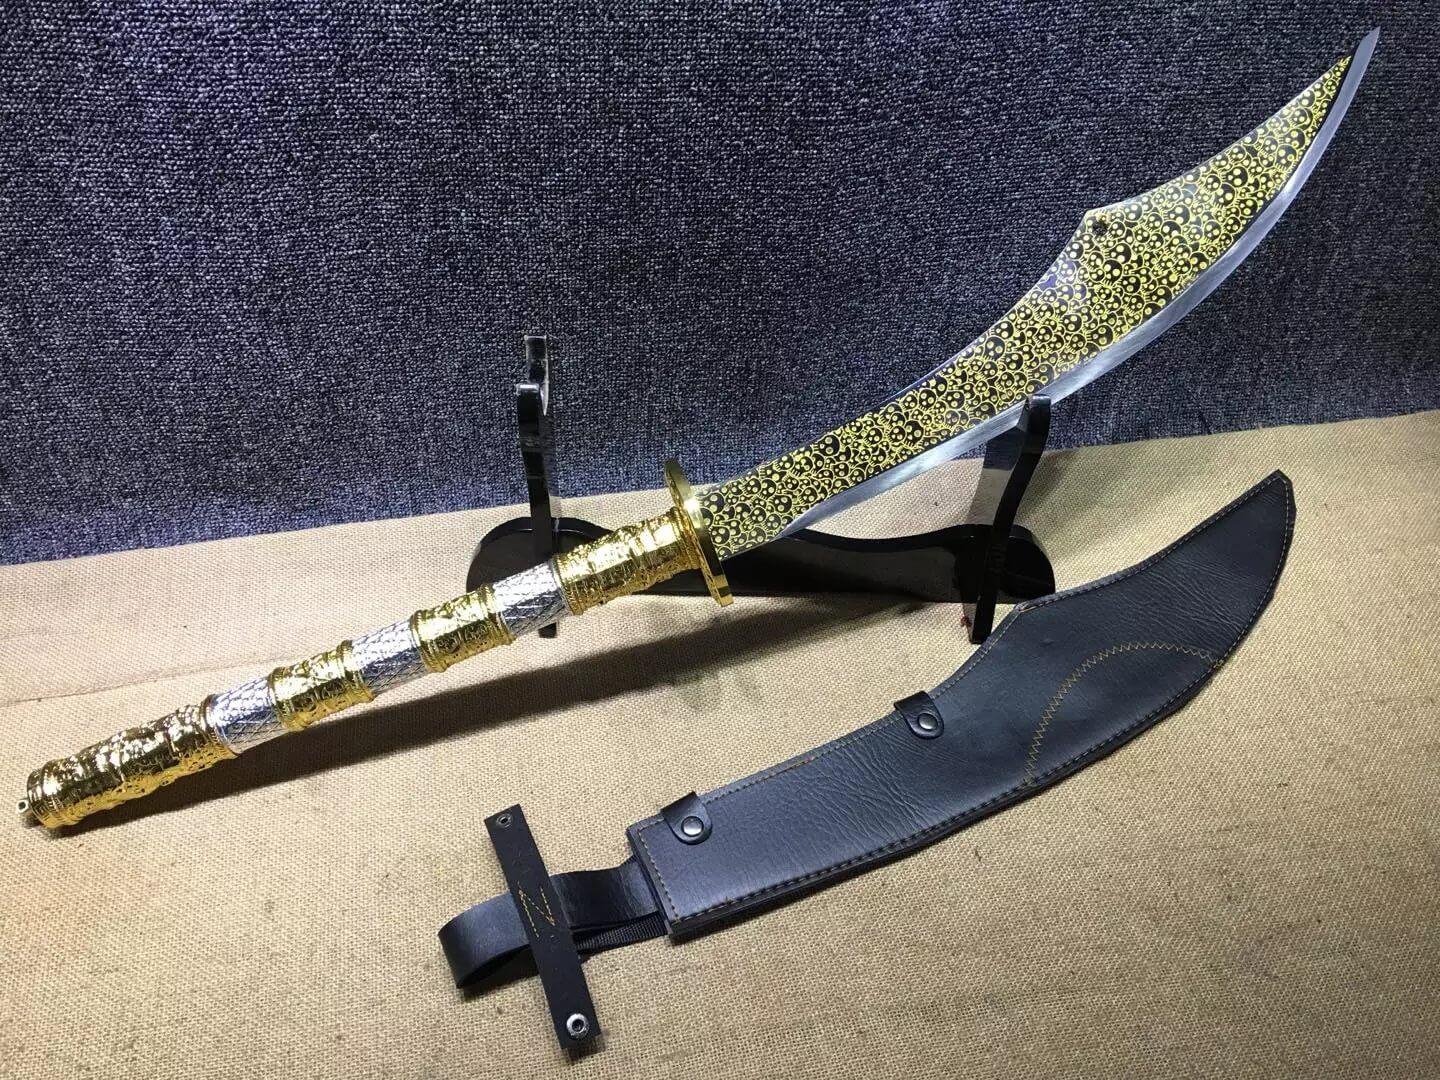 Kangxi Sword,High carbon steel,Alloy Handle,Length 35" - Chinese sword shop